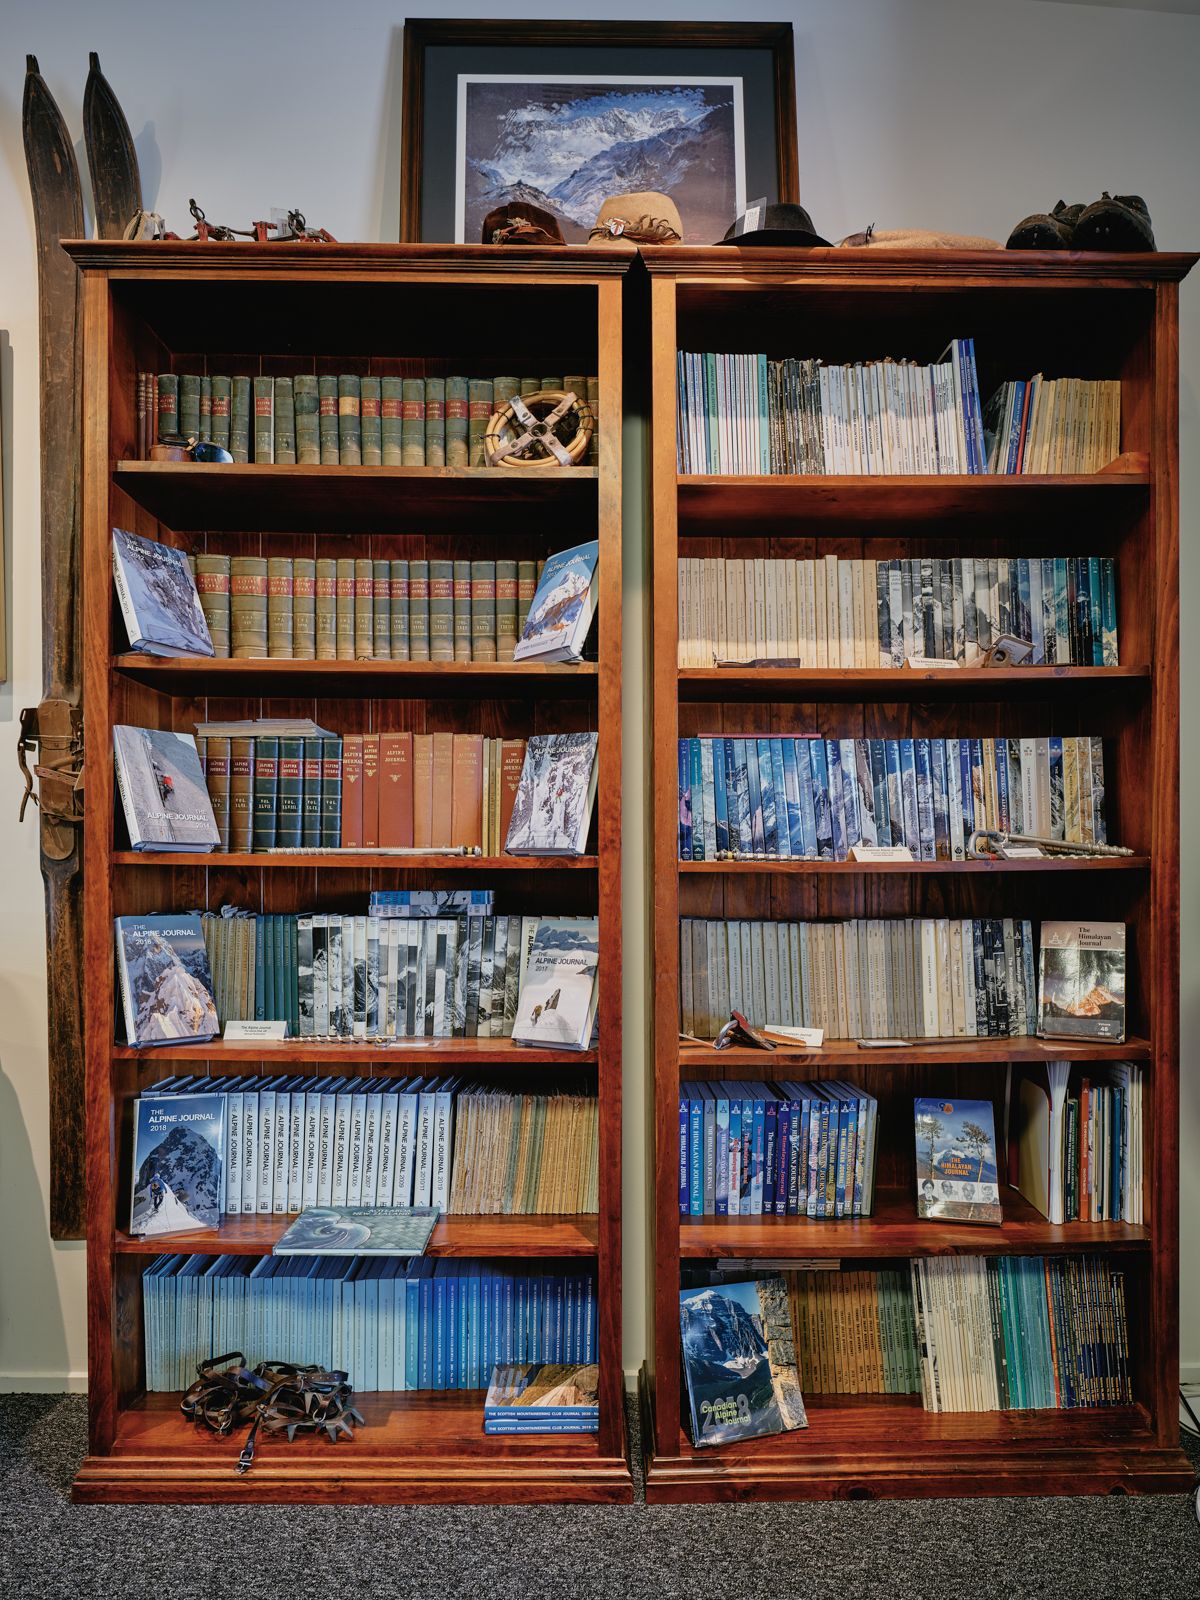 NZAC Library shelves